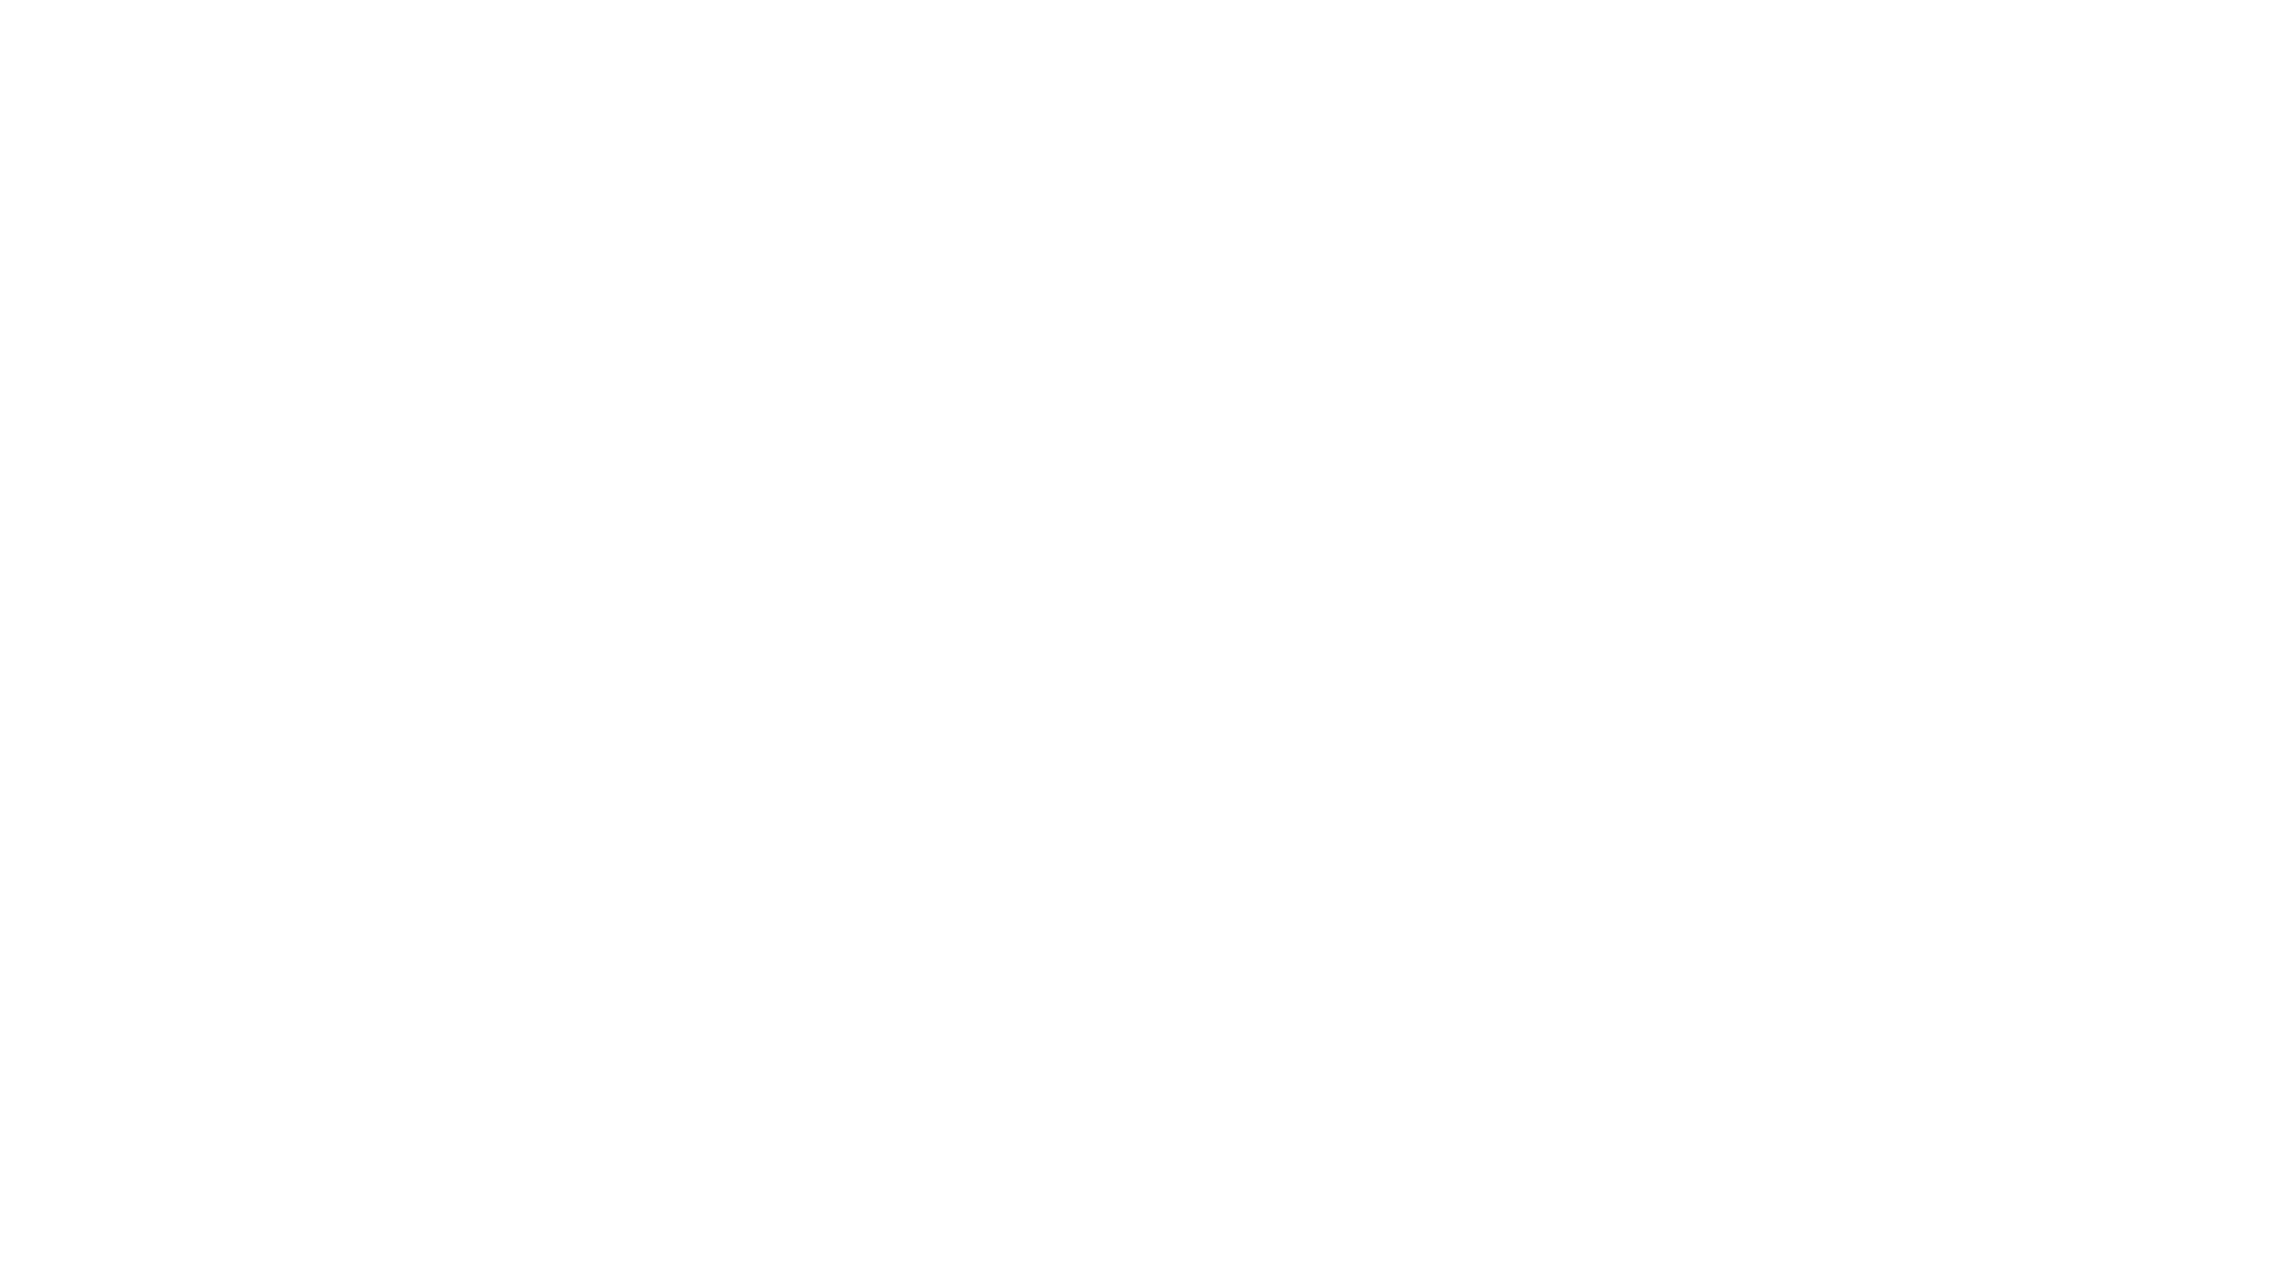 The Ink Studio